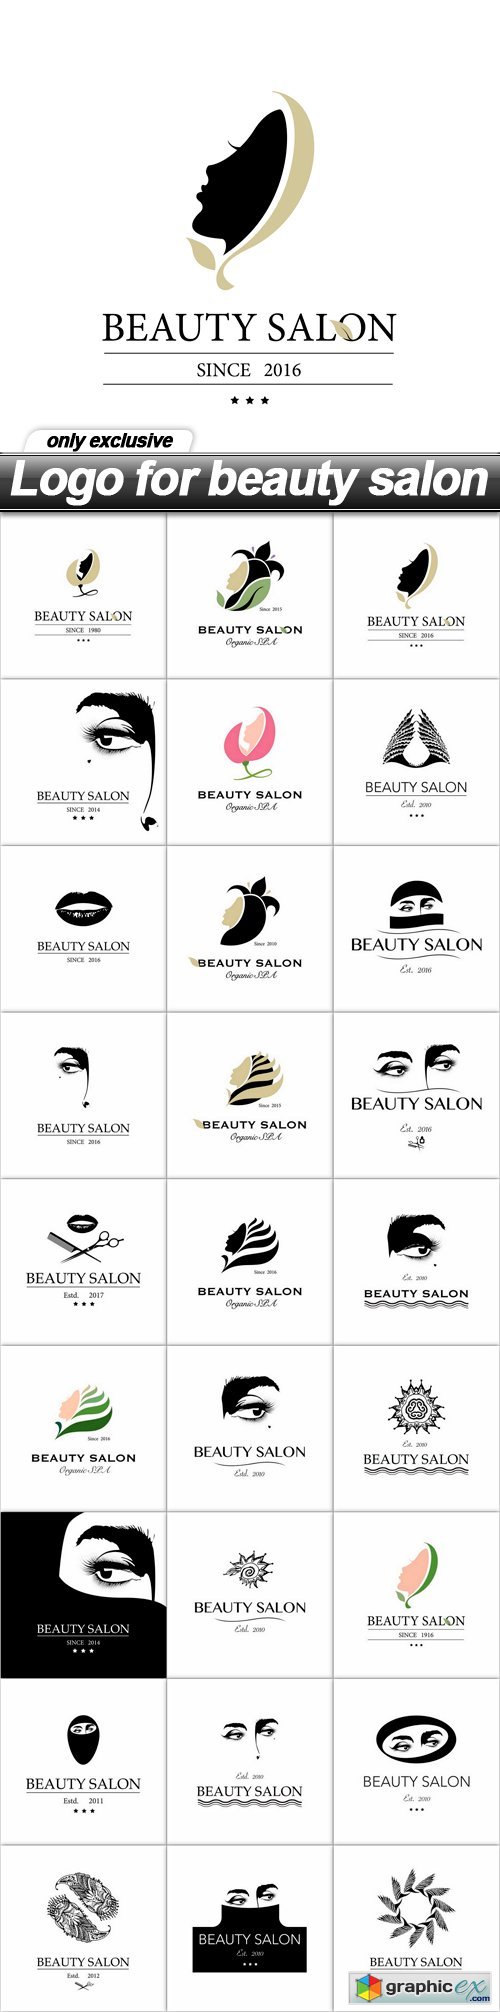 Logo for beauty salon - 27 EPS